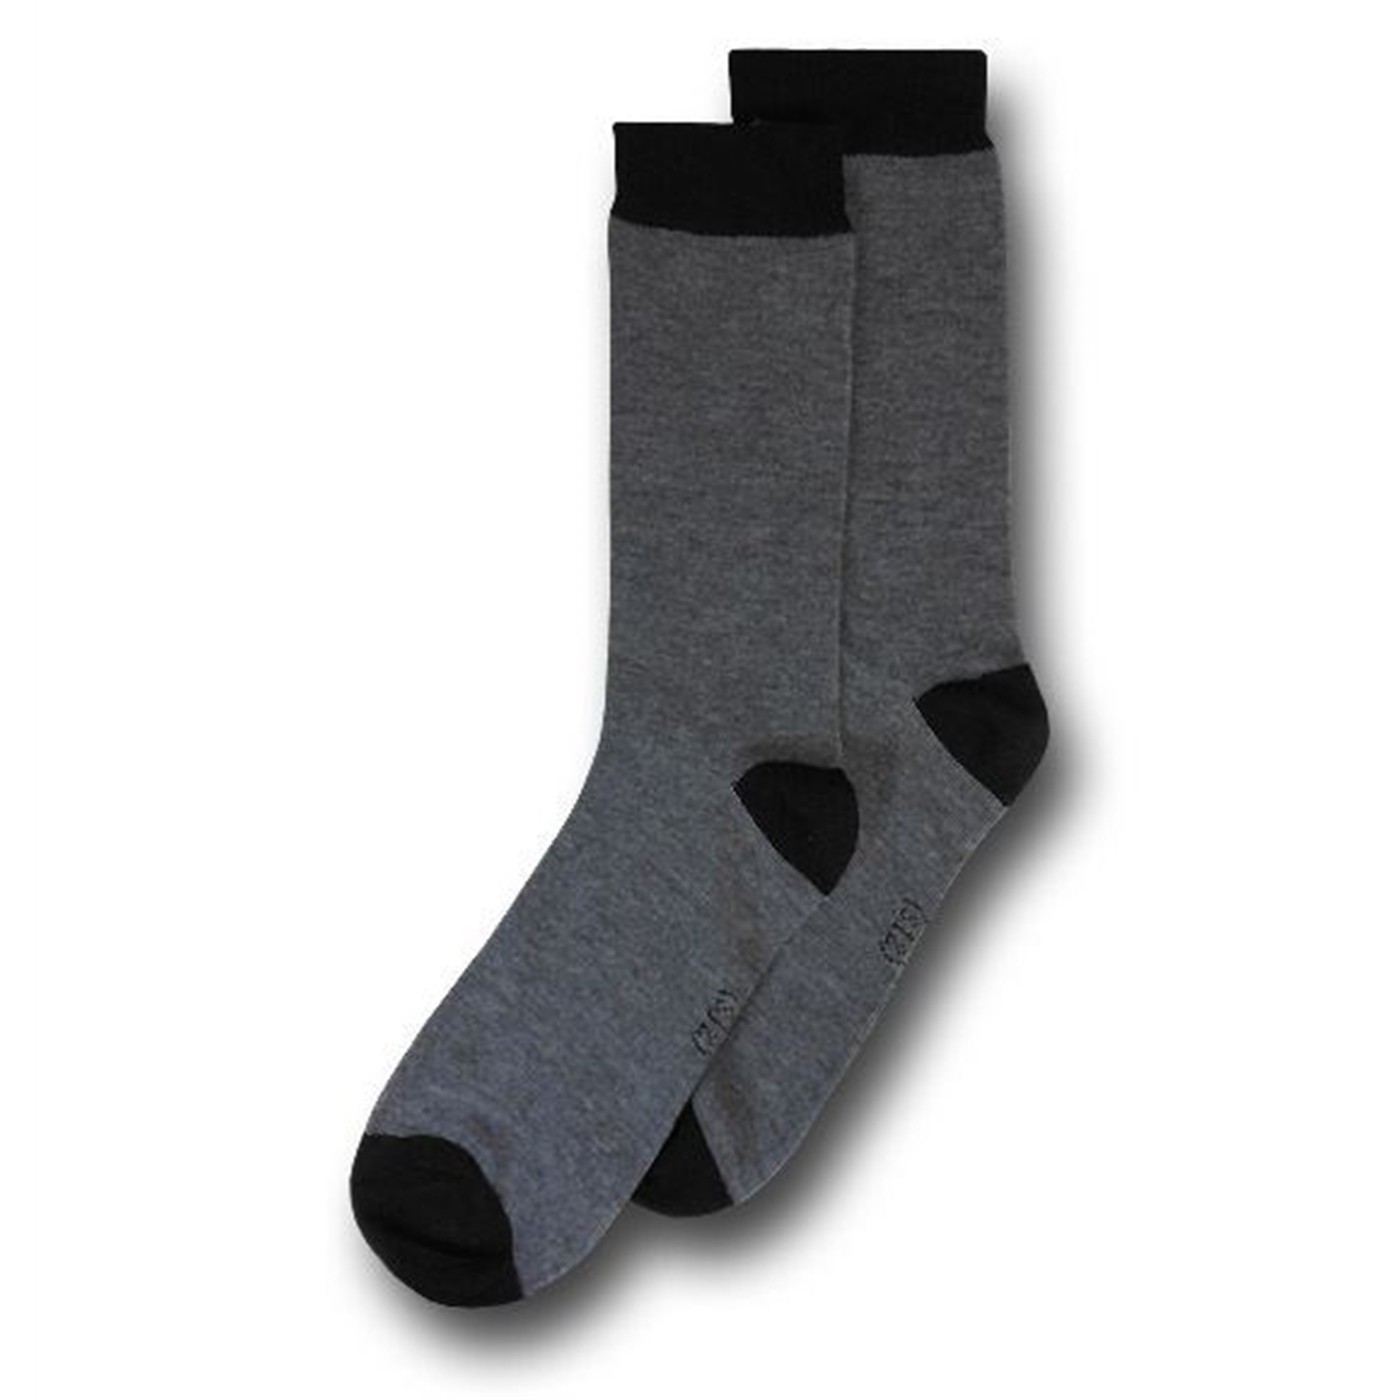 Batman Bat Signal Image and Grey Socks 2-Pack